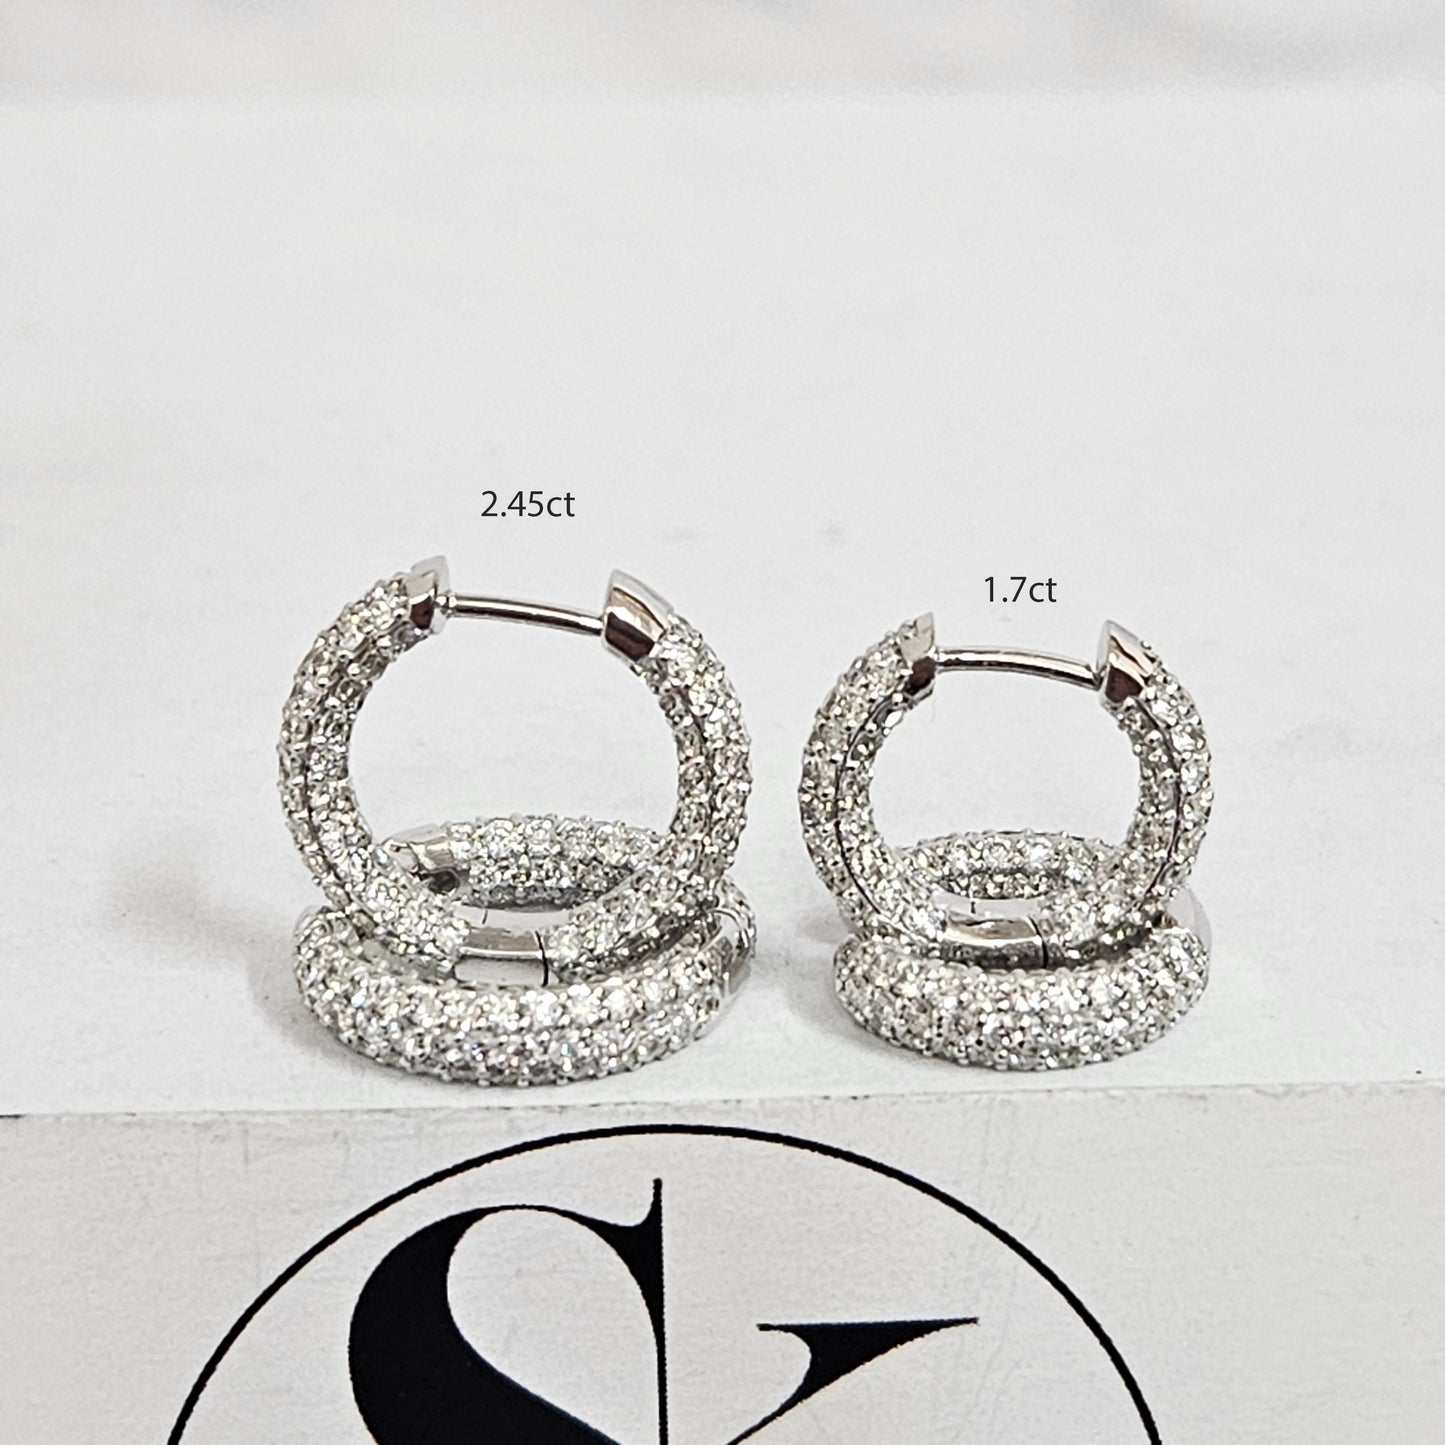 Full Diamond Hoop 1.7ct Dome Huggies/Men's & Women's Diamond Hoop Earrings/14K-18K Natural Diamond 13mm Hoop Earrings/Anniversary gift